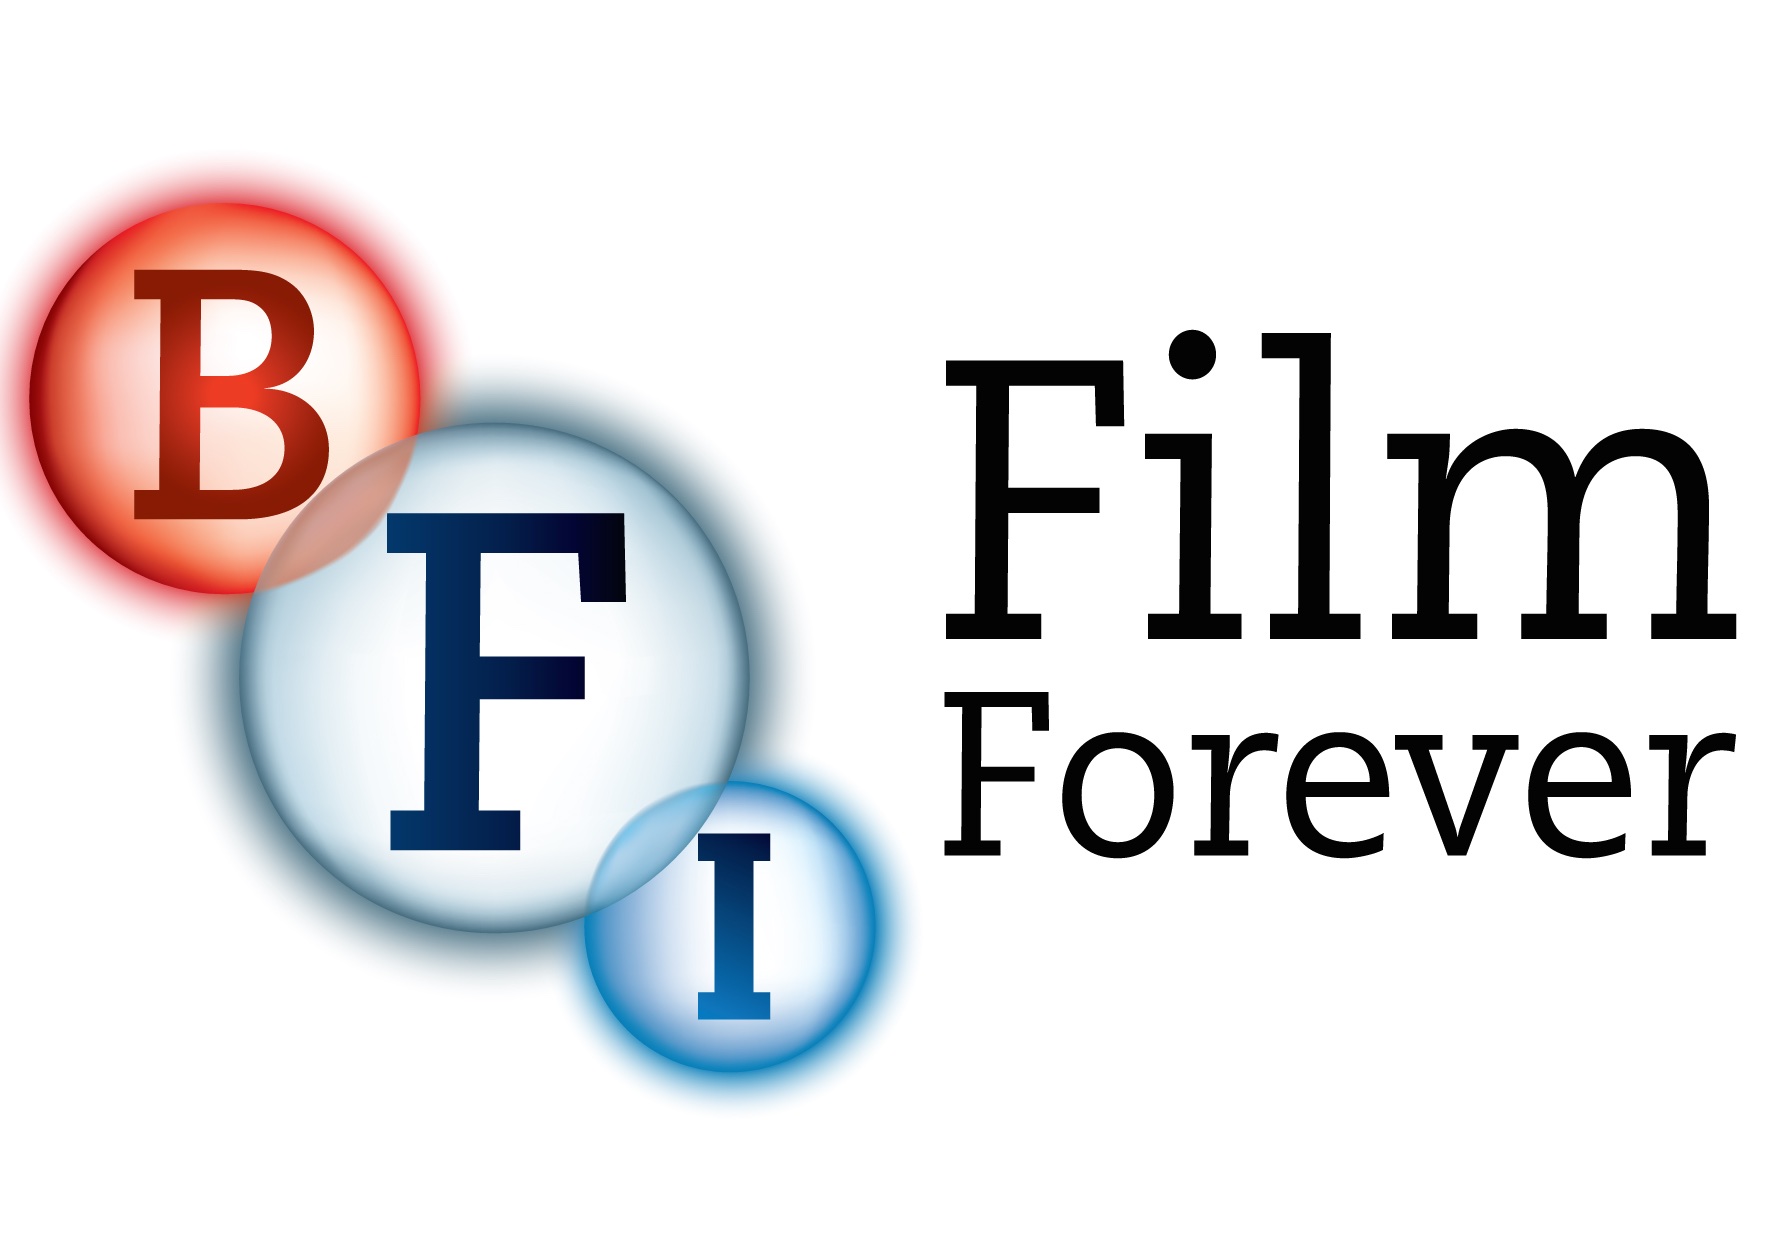 BFI-logo.jpg